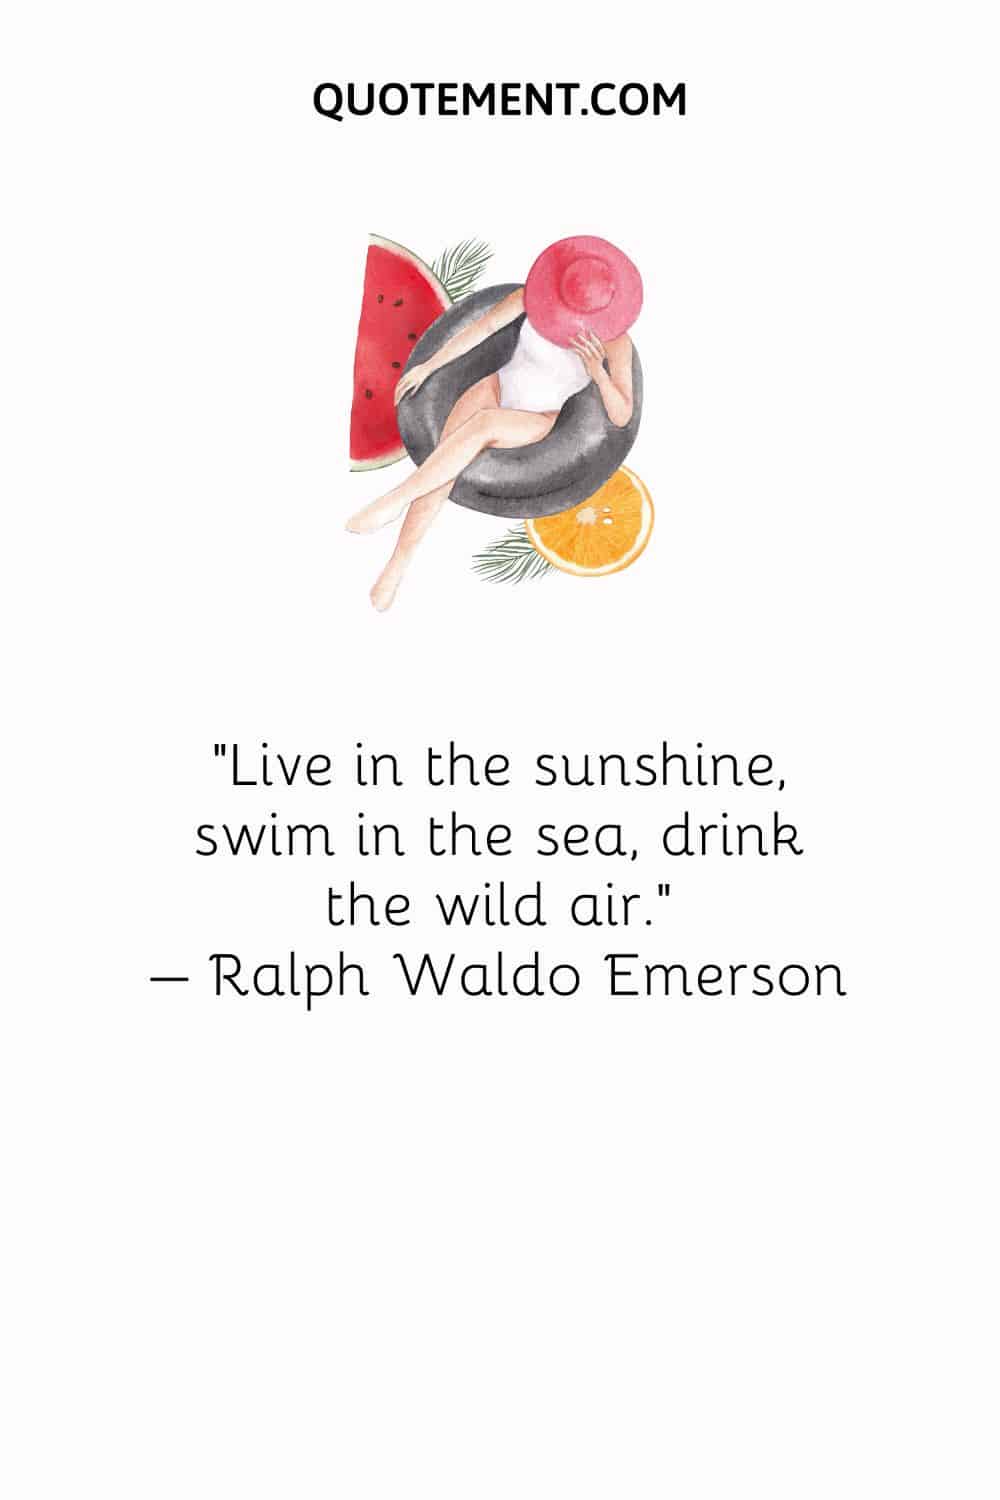 Live in the sunshine, swim in the sea, drink the wild air. – Ralph Waldo Emerson